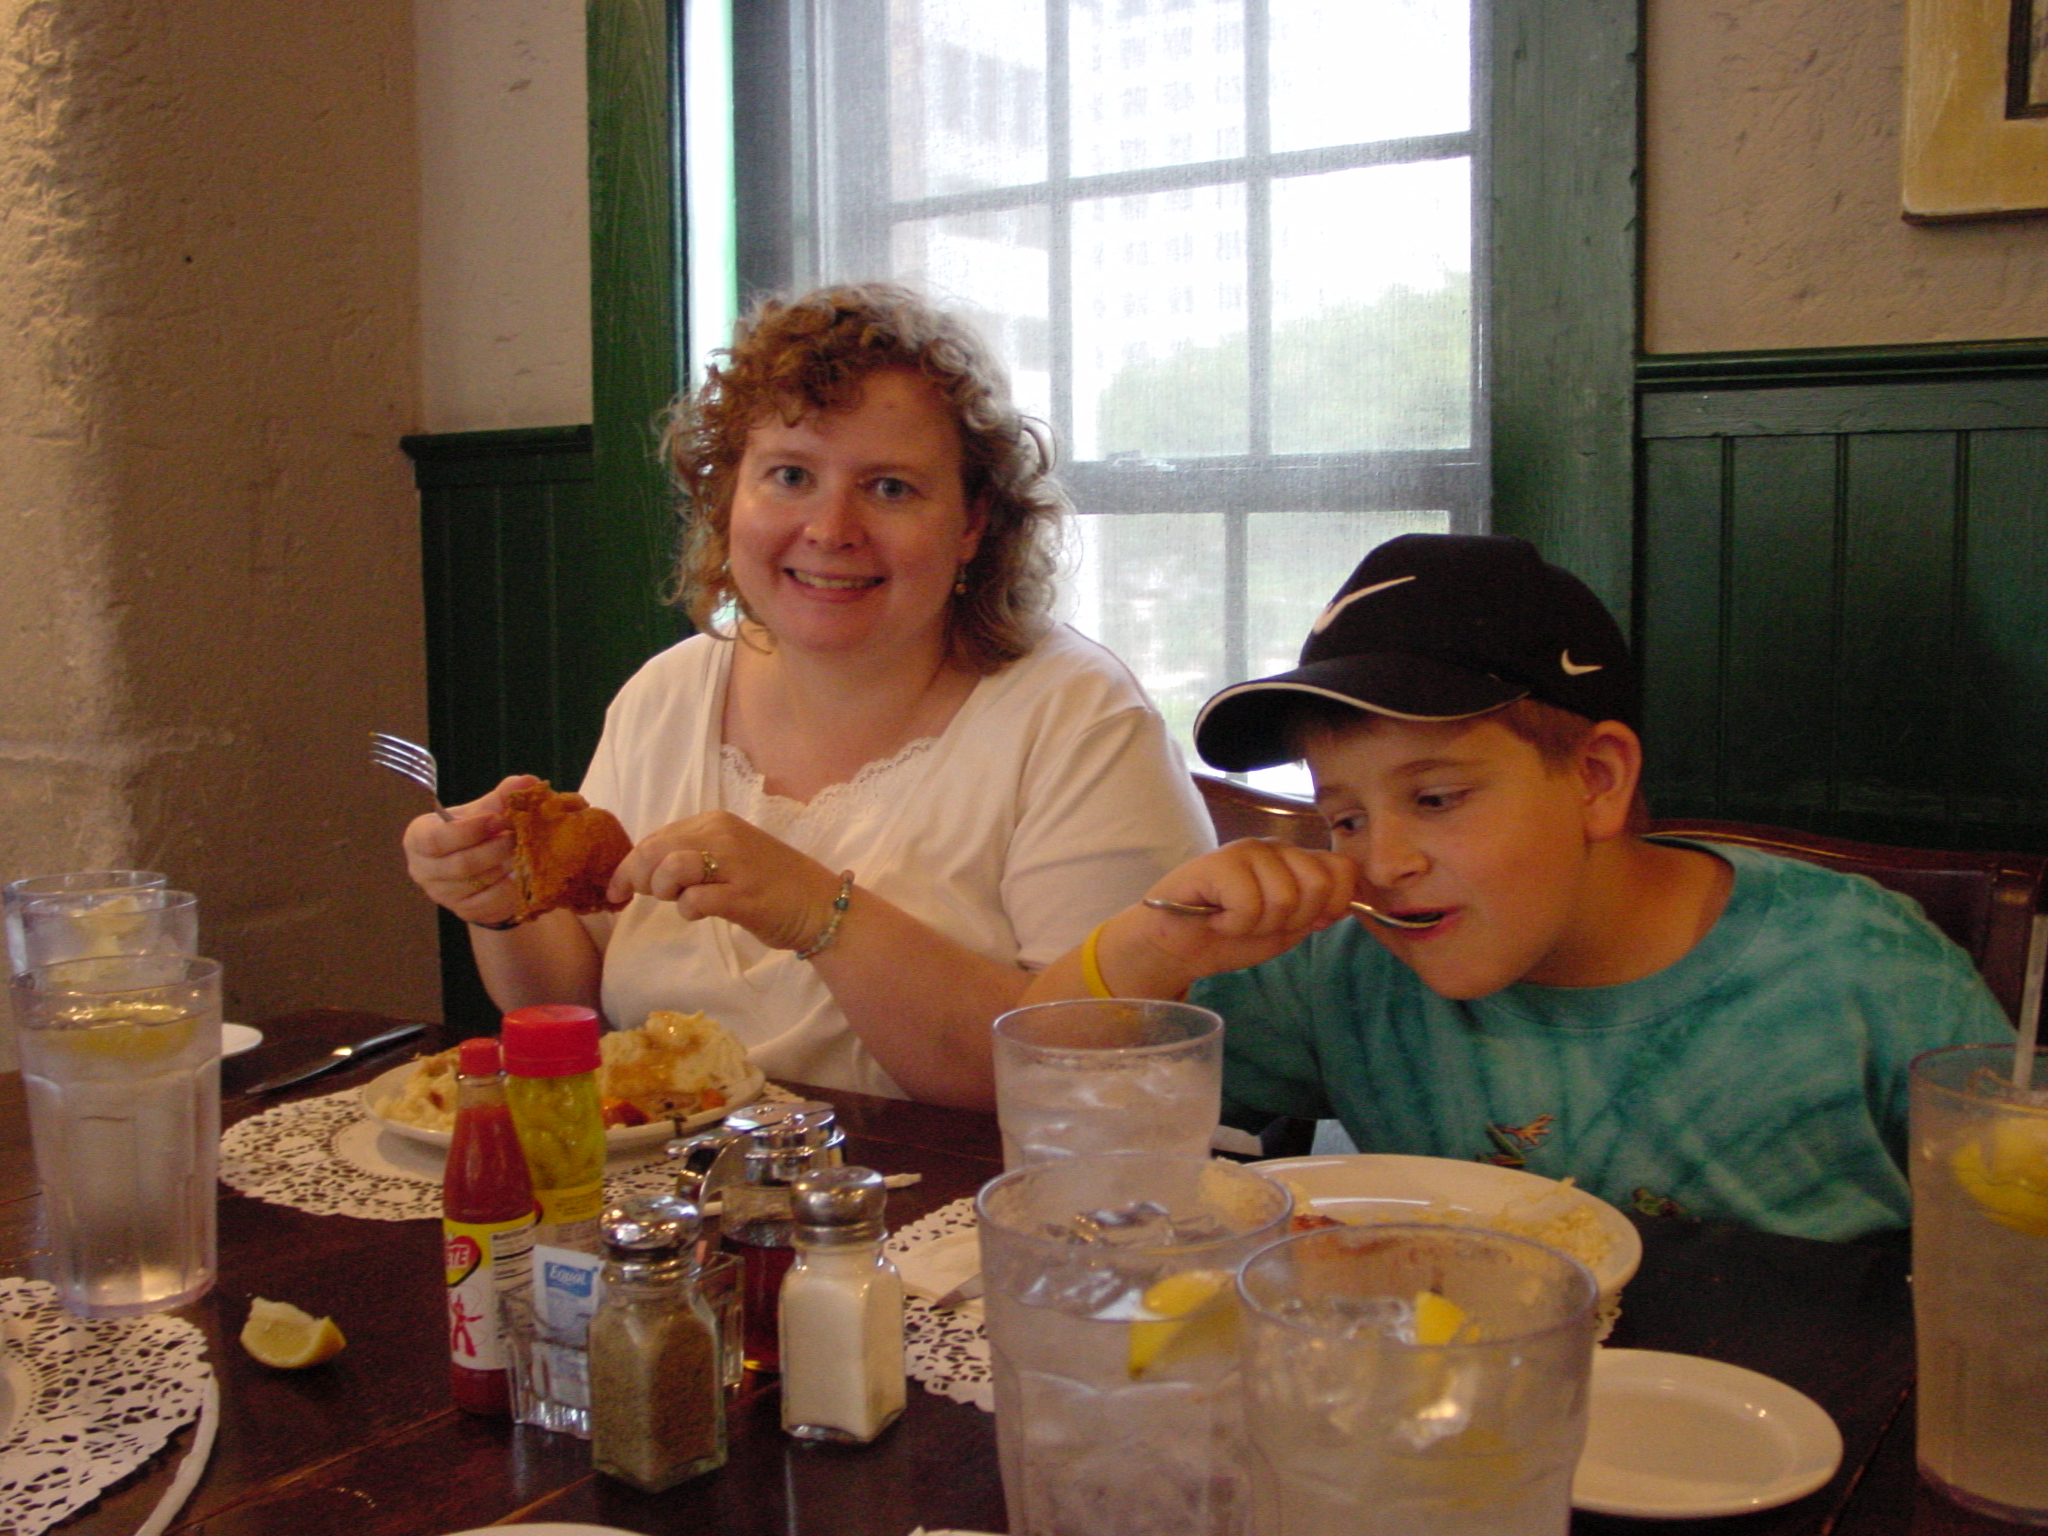 Eating Paula's Chicken in 2006